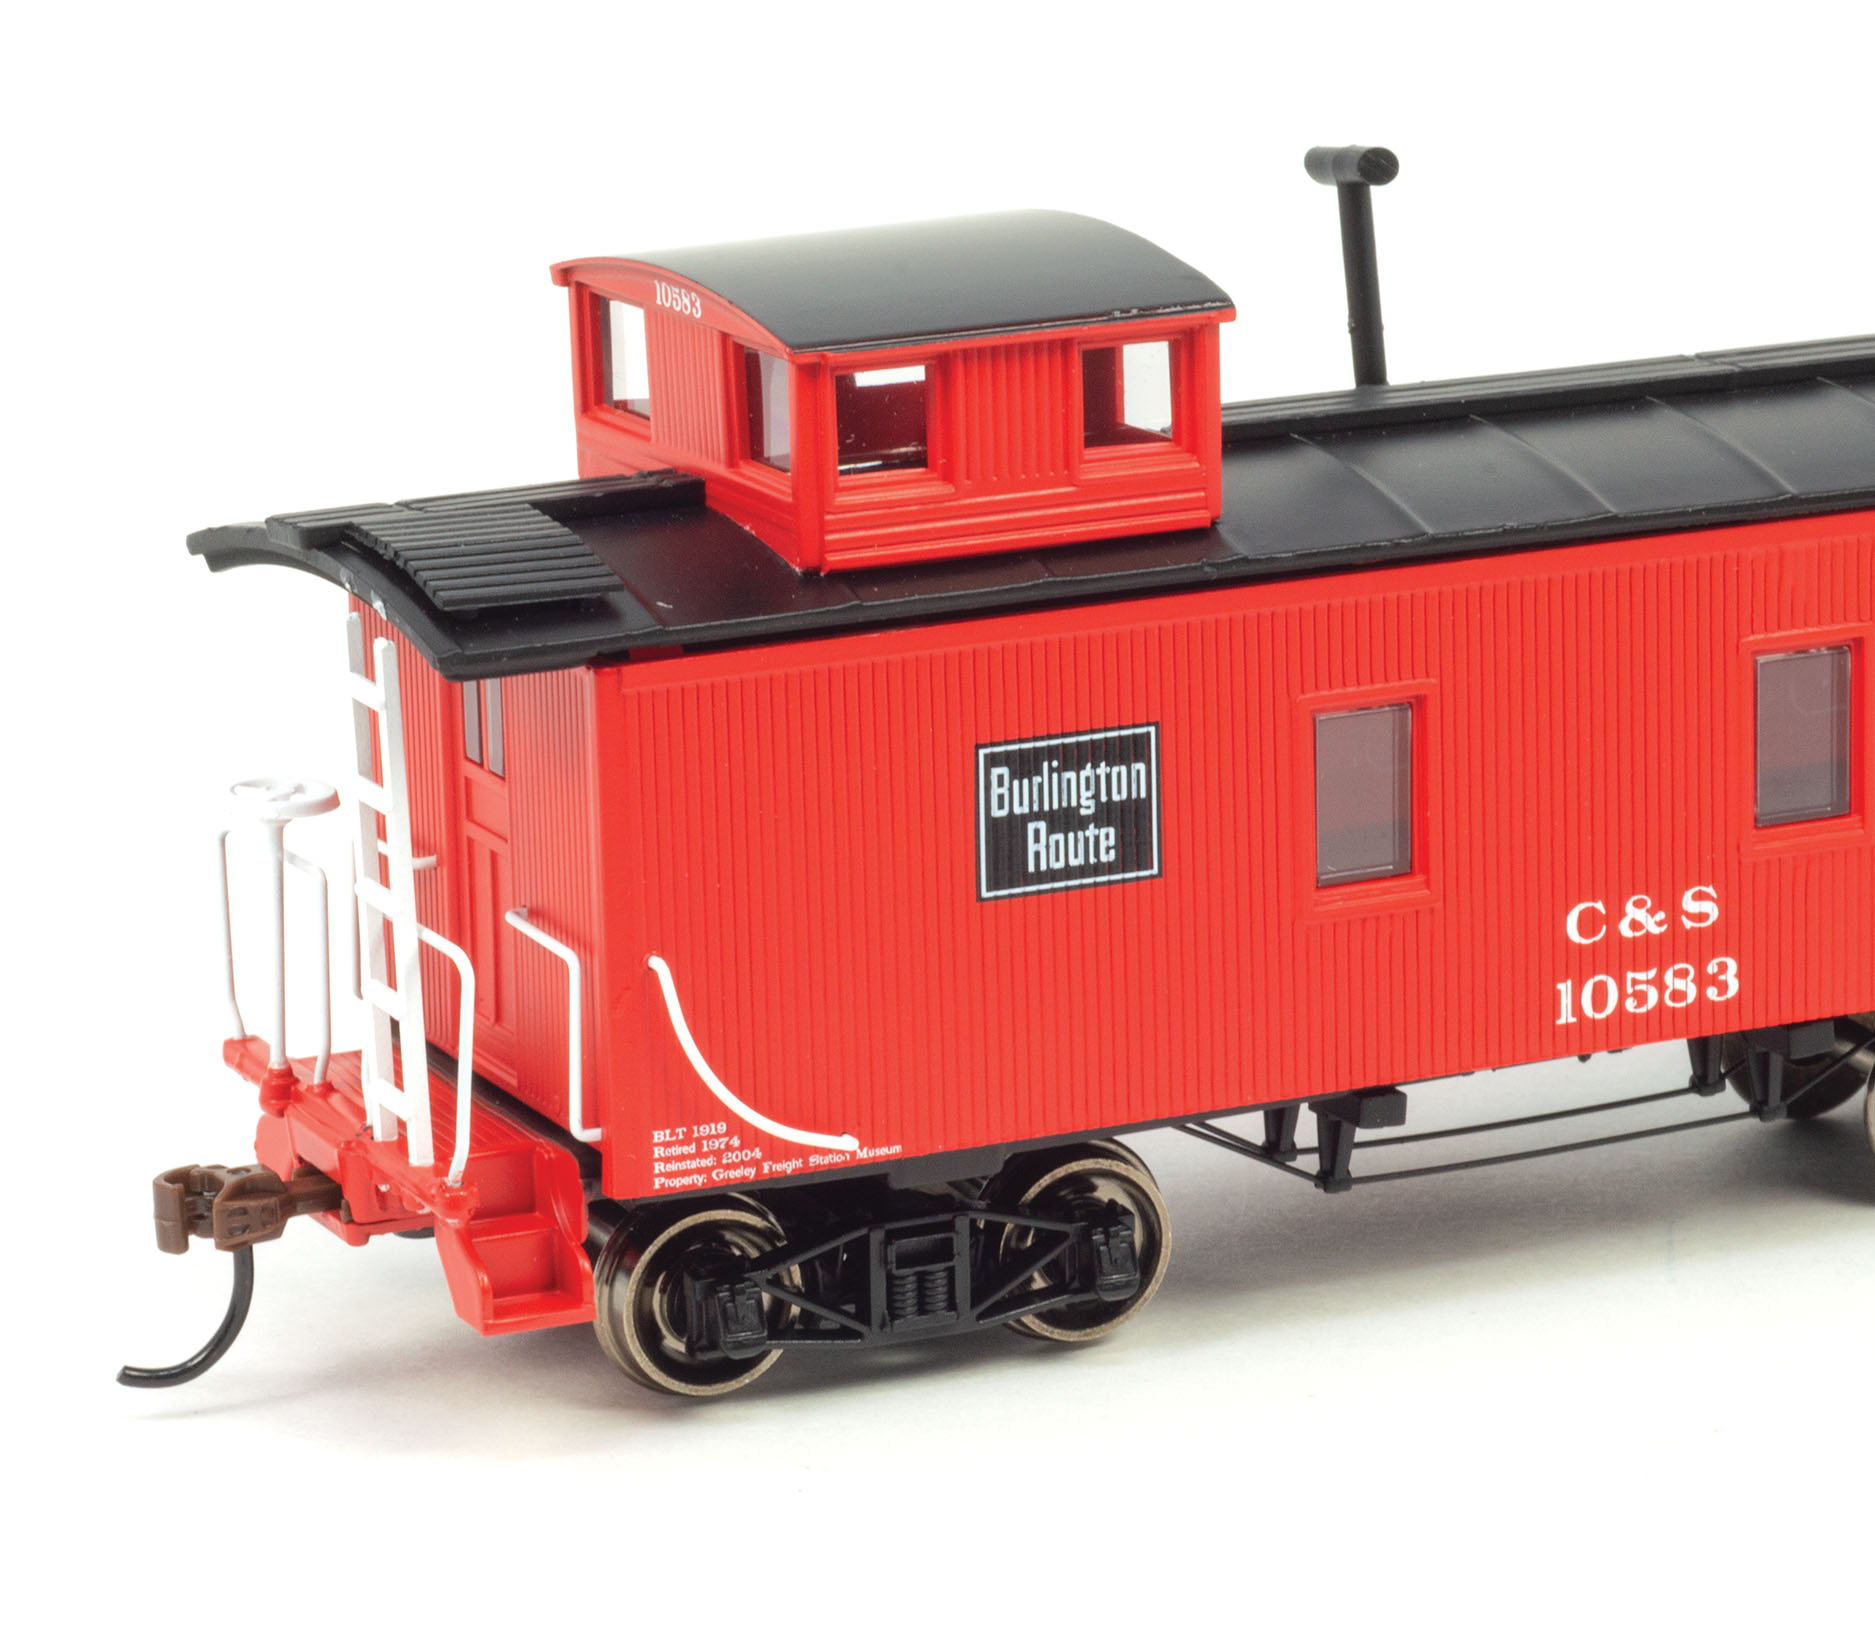 Colorado Model Railroad Museum’s Caboose in HO scale